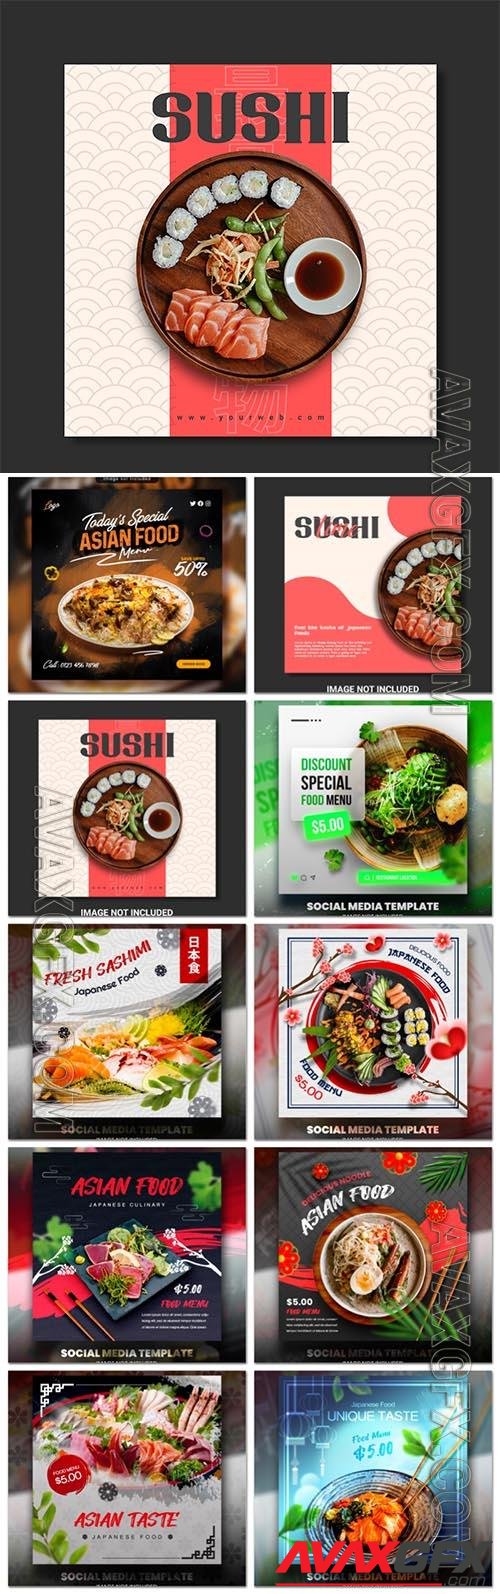 Food social media promotion psd flyer template vol 3